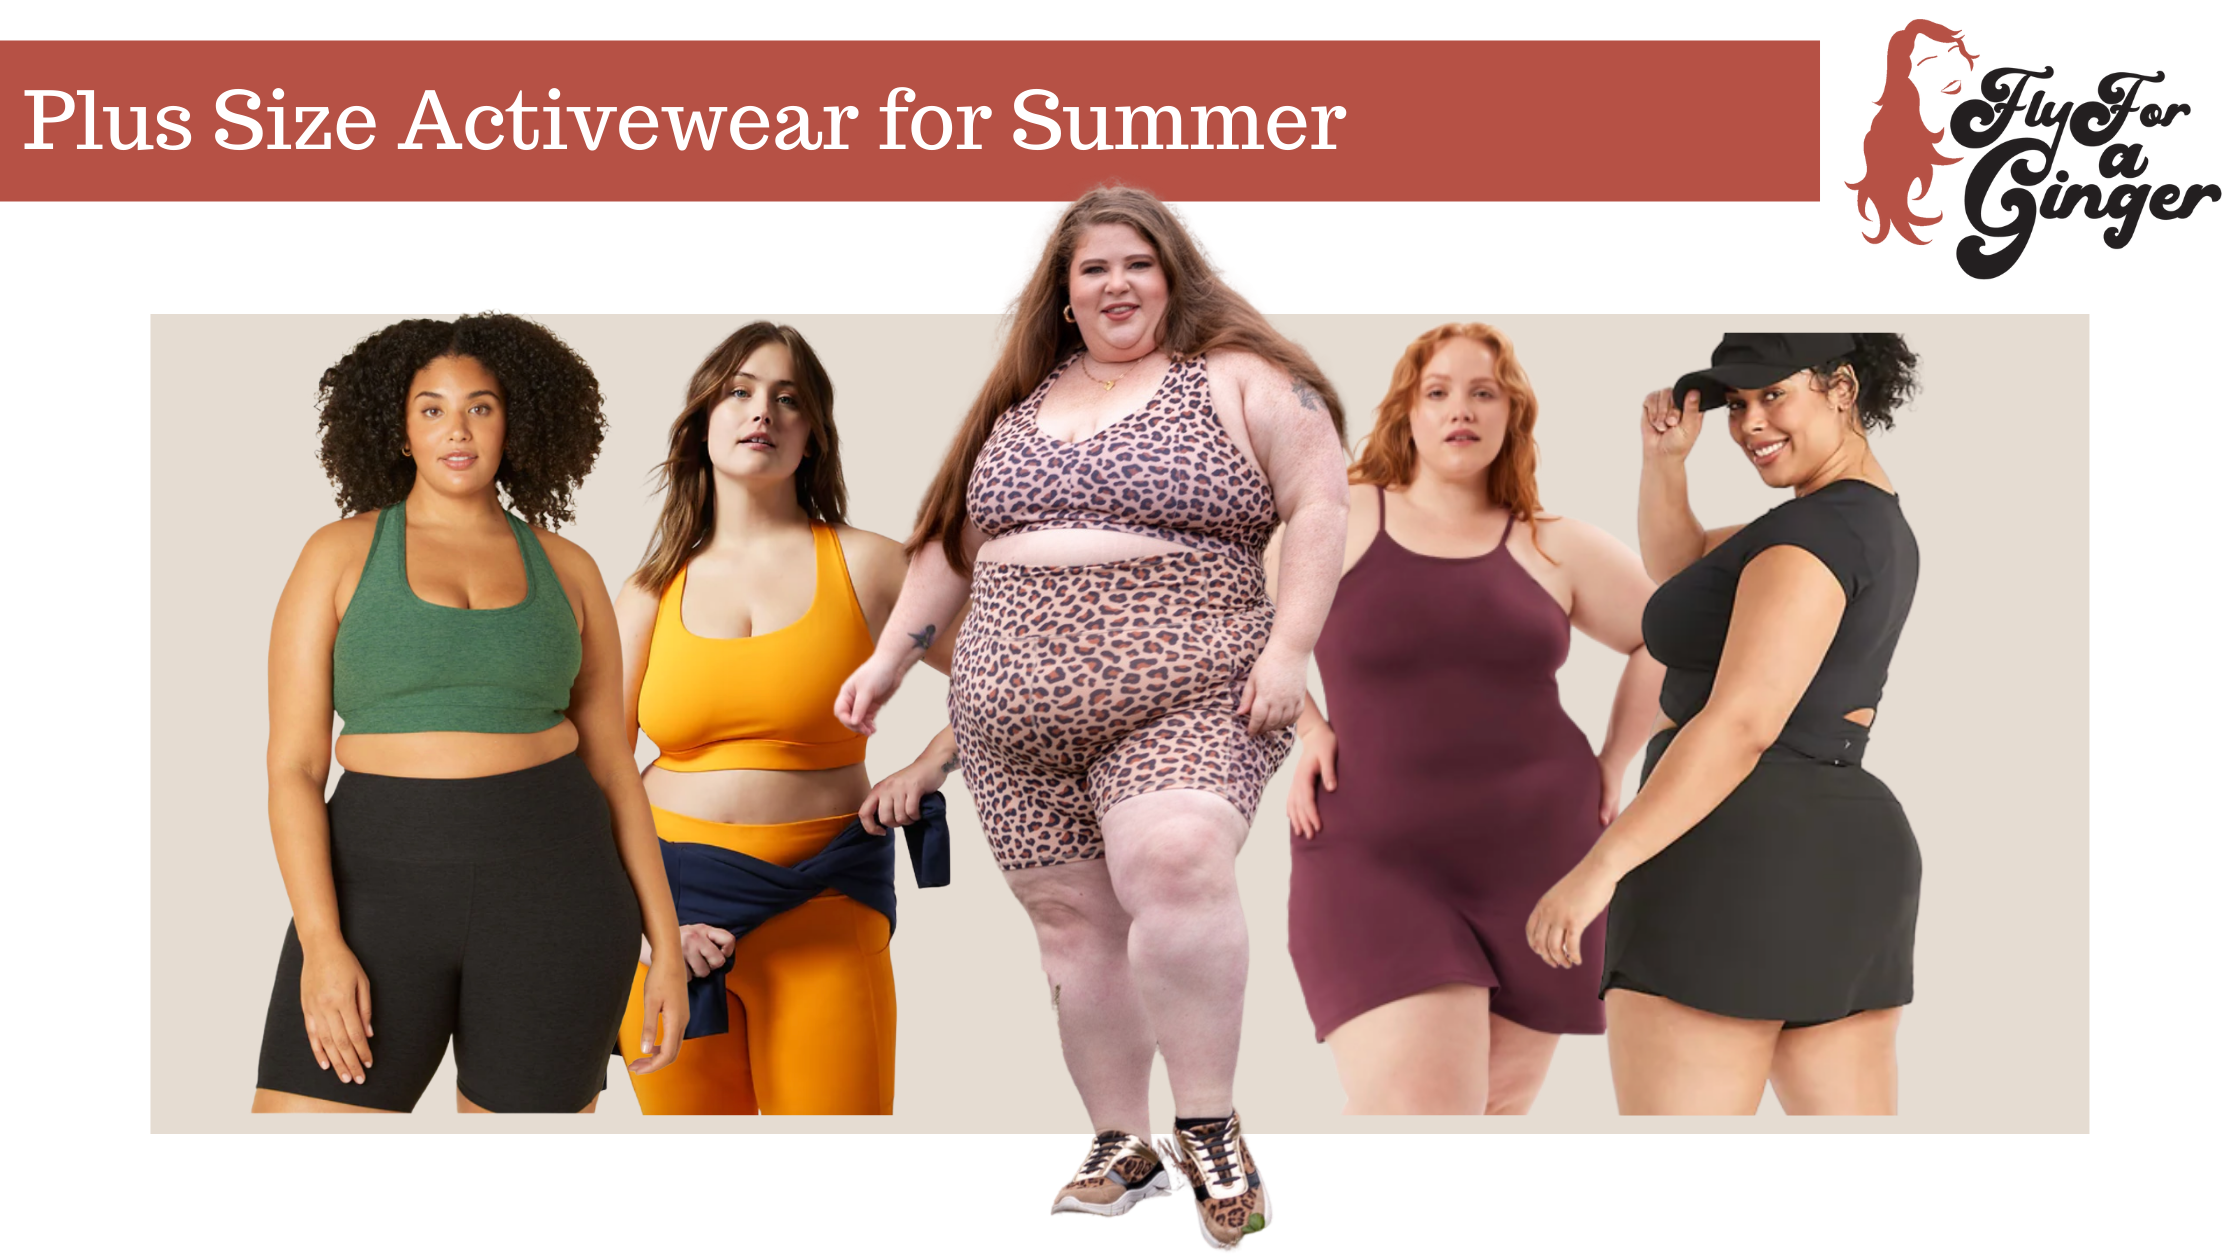  Women's Plus Size Activewear